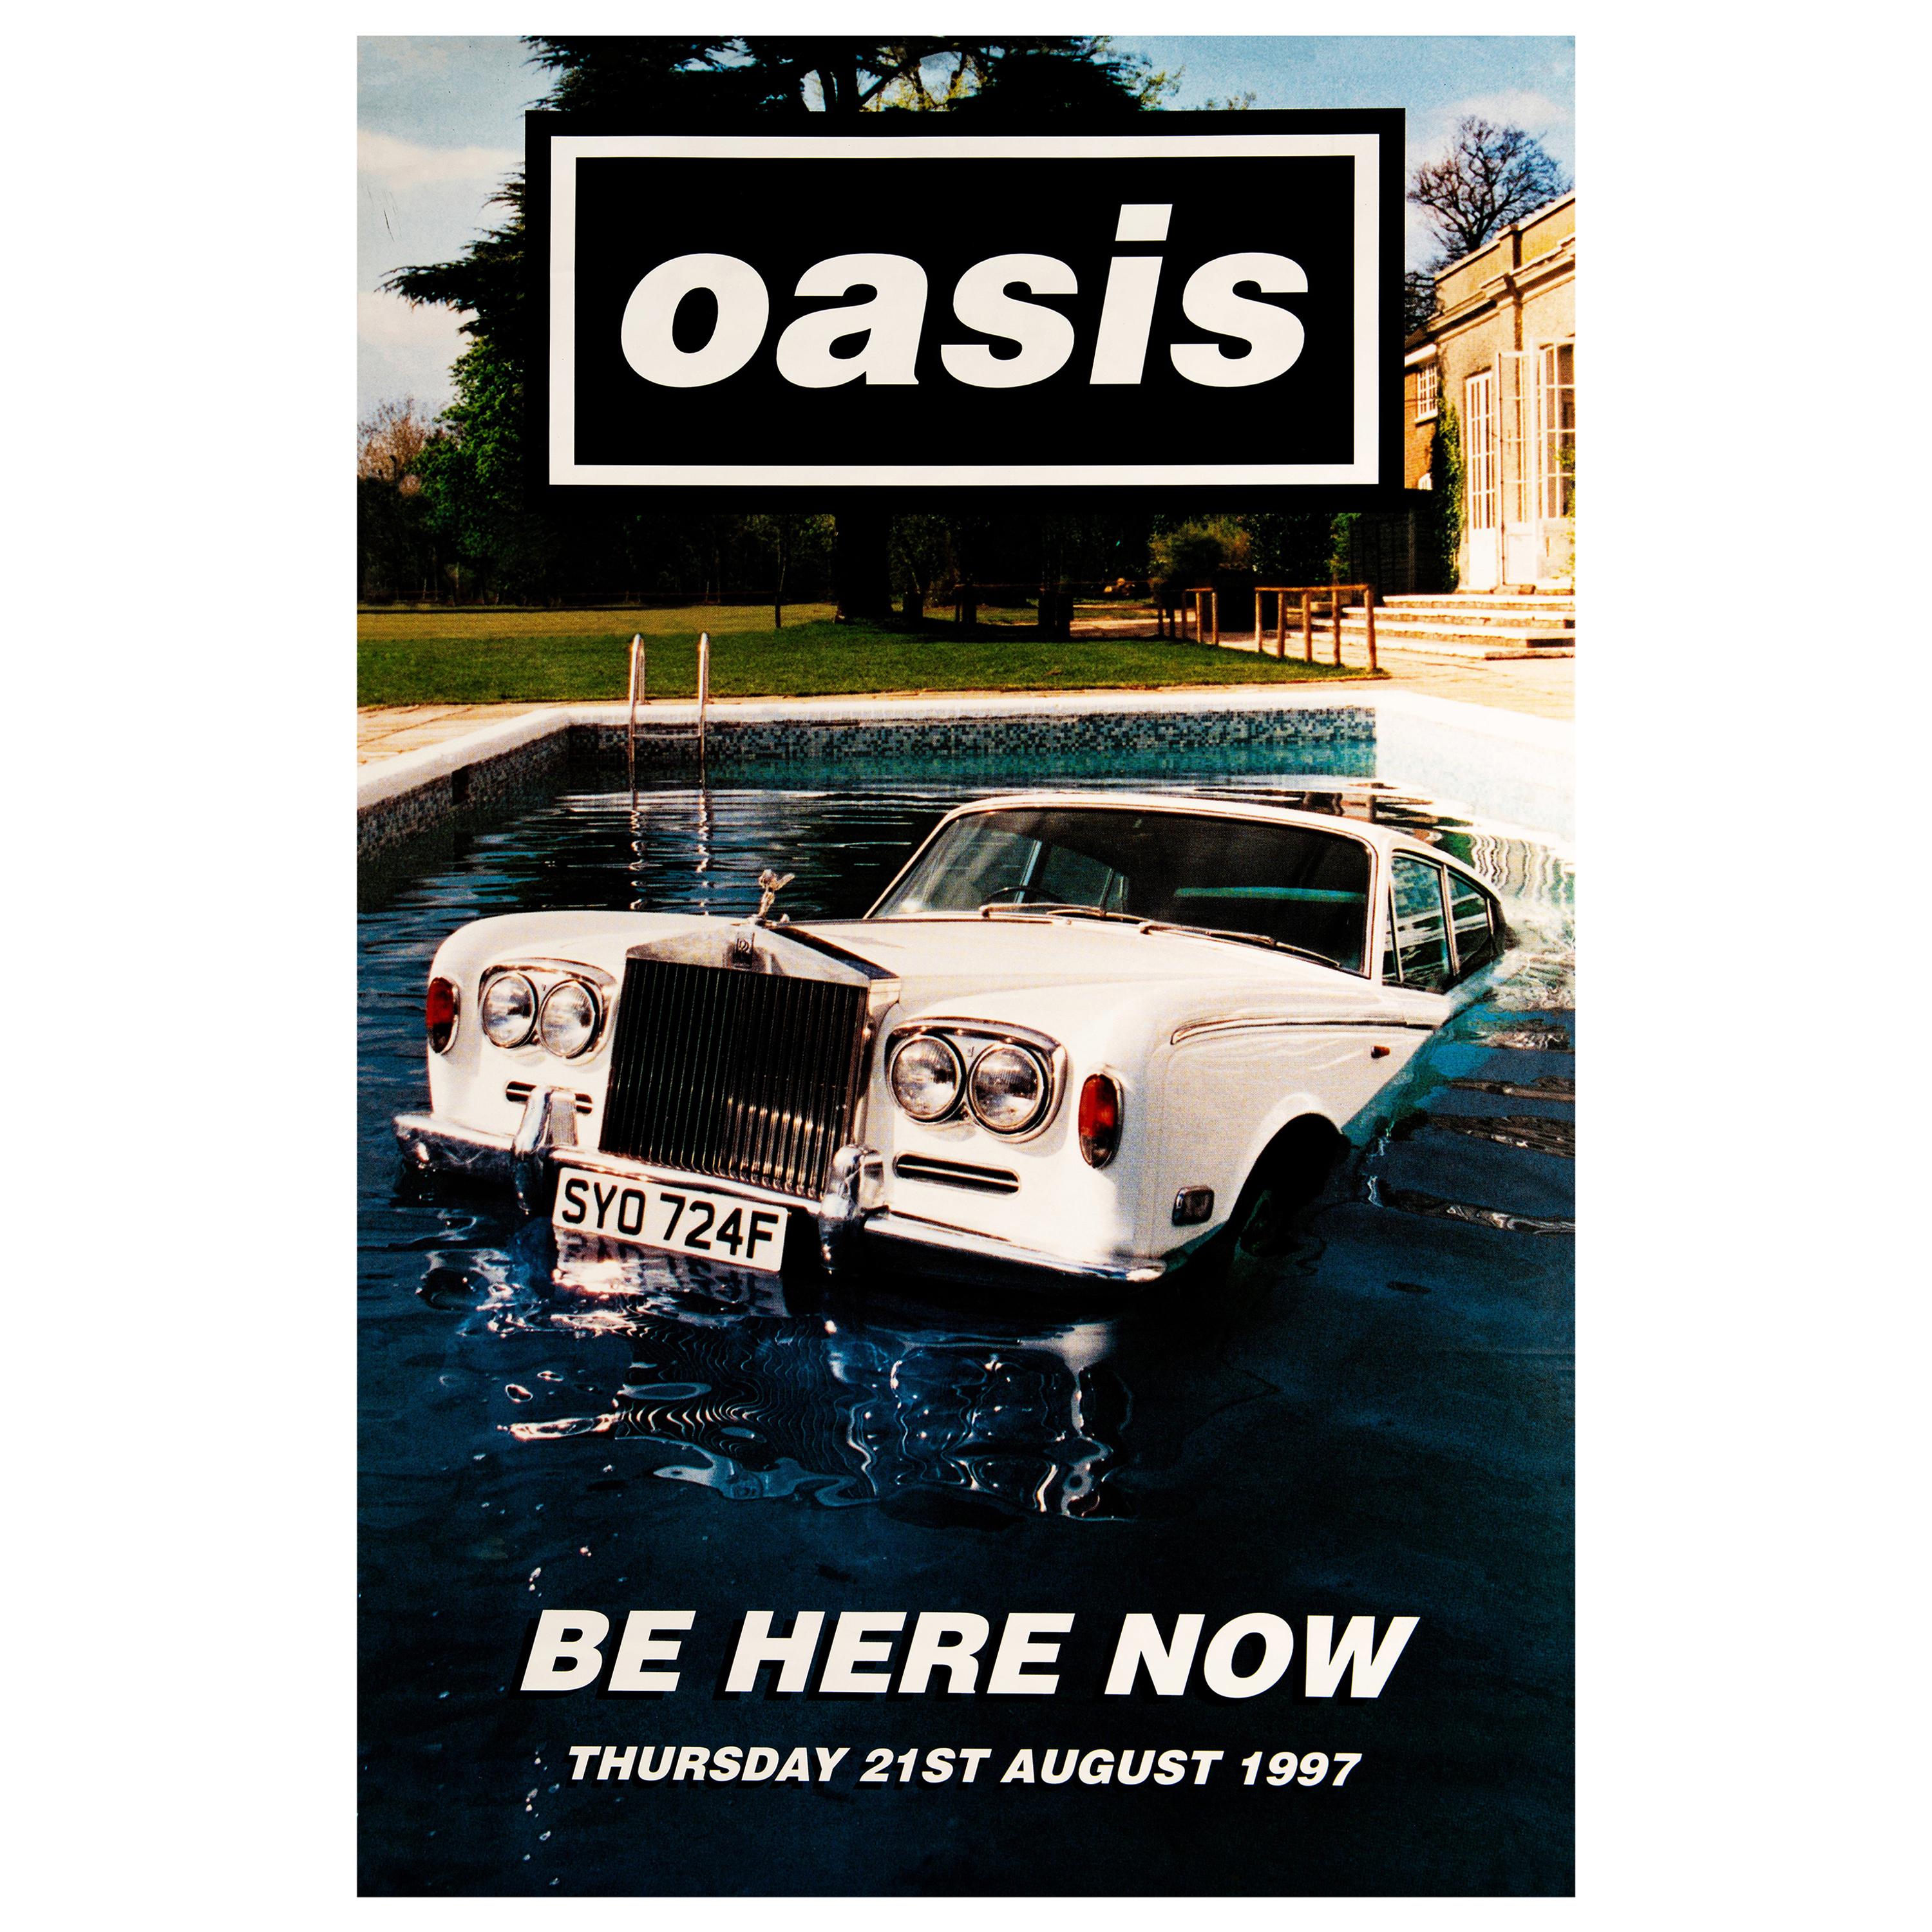 Oasis 'Be Here Now' Original UK Album Promo Poster, 1997